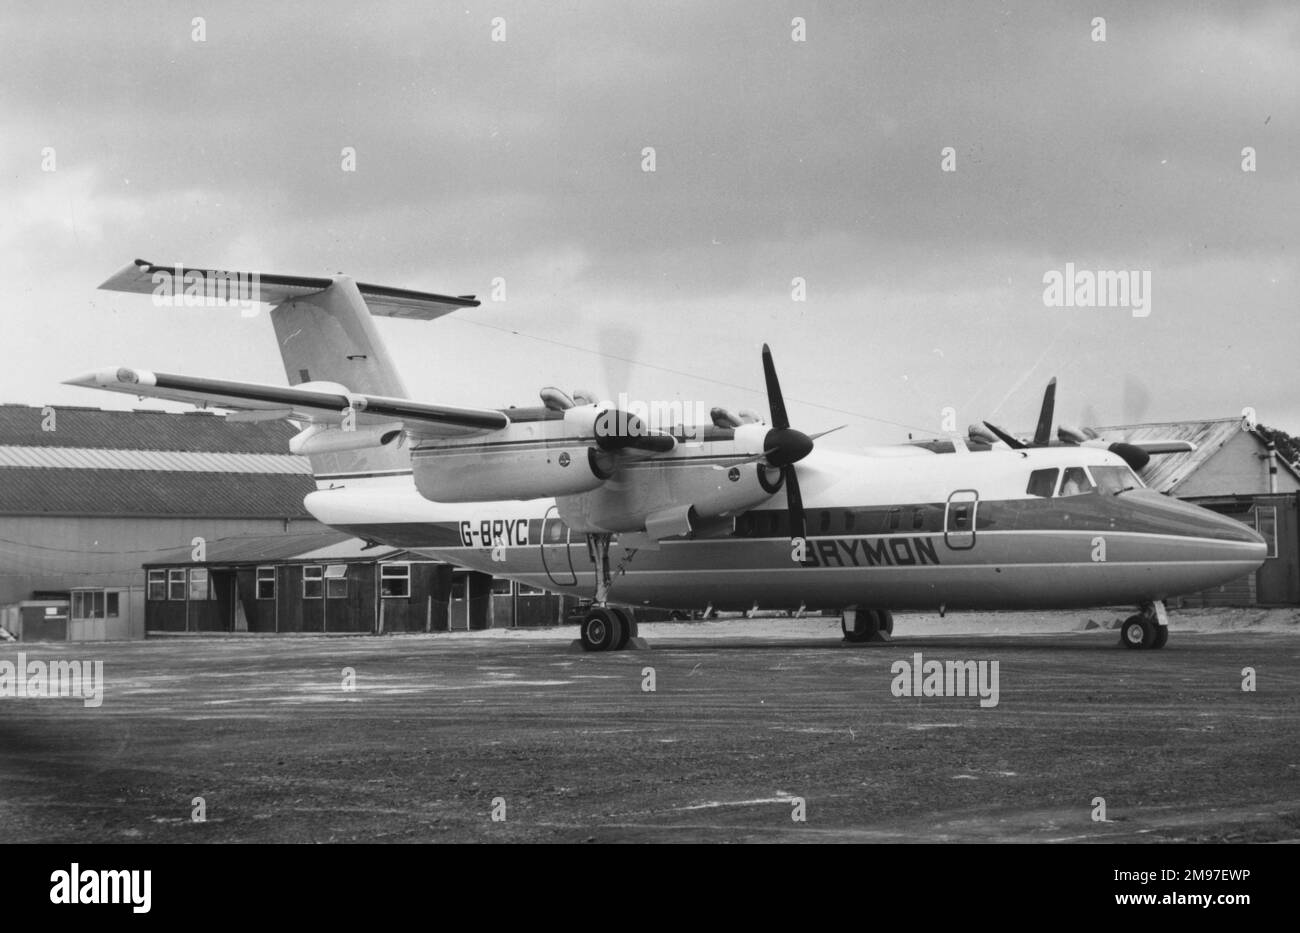 De Havilland Canada DHC-7 -Brymon. Stockfoto